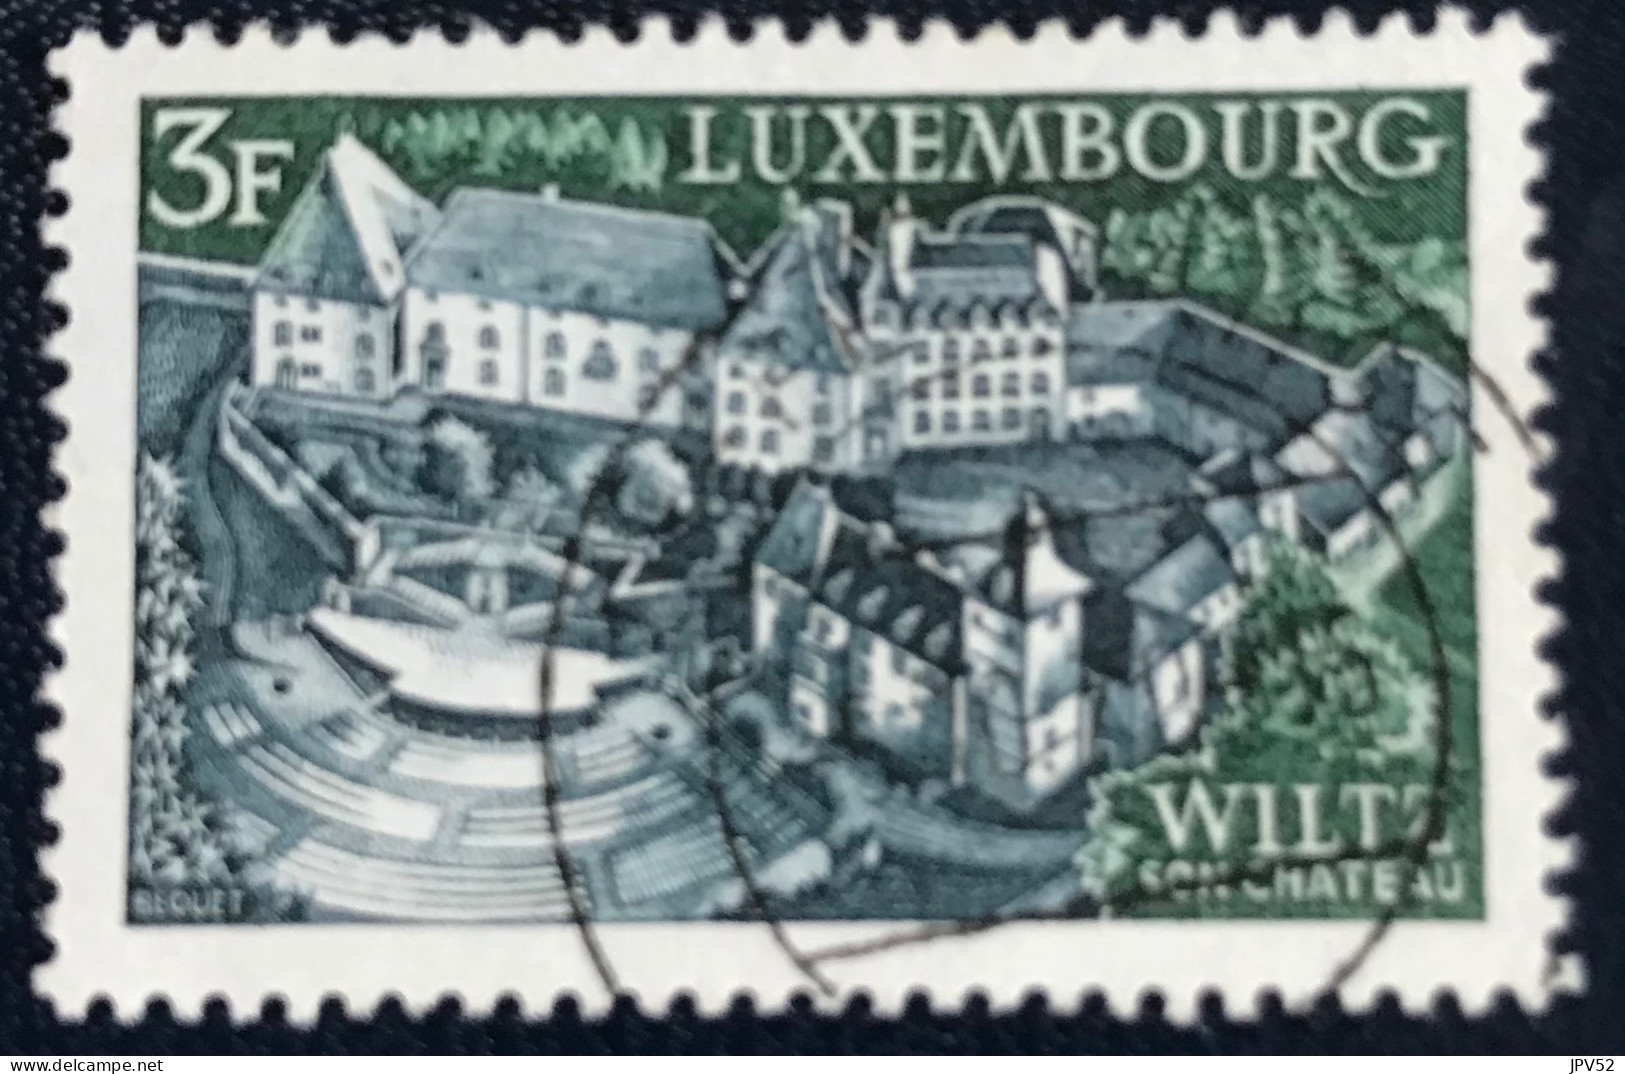 Luxembourg - Luxemburg - C18/33 - 1969 - (°)used - Michel 797 - Wiltz - Usados